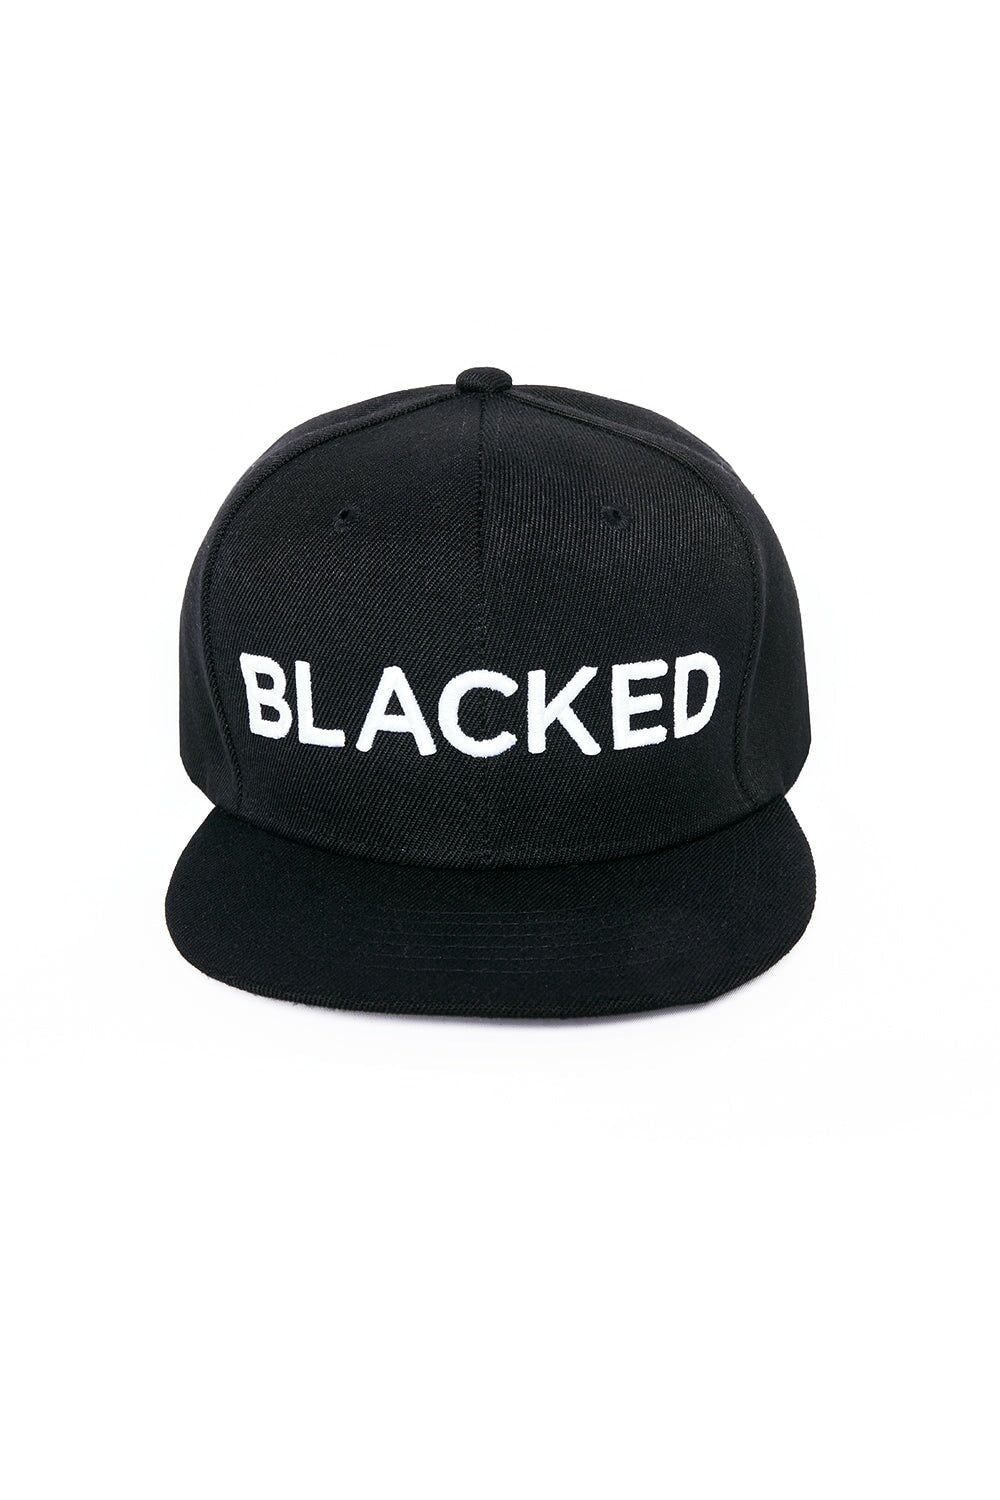 Blacked Snap Back